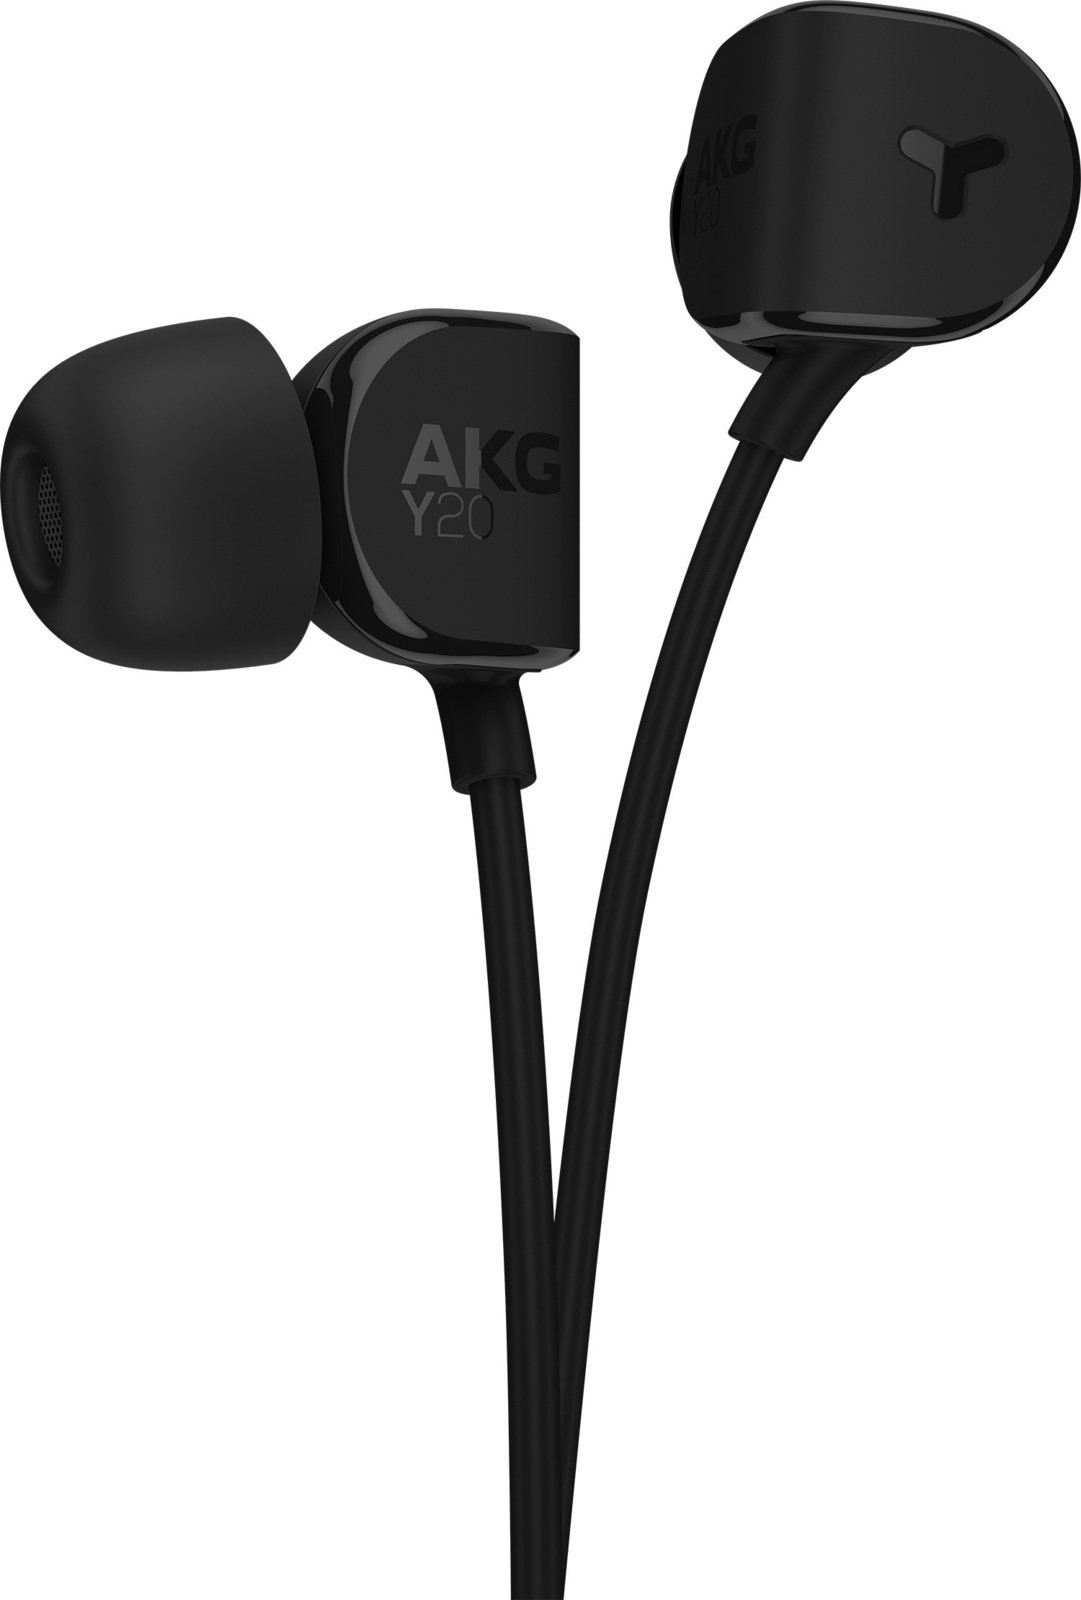 U-uho slušalice AKG Y20 Black